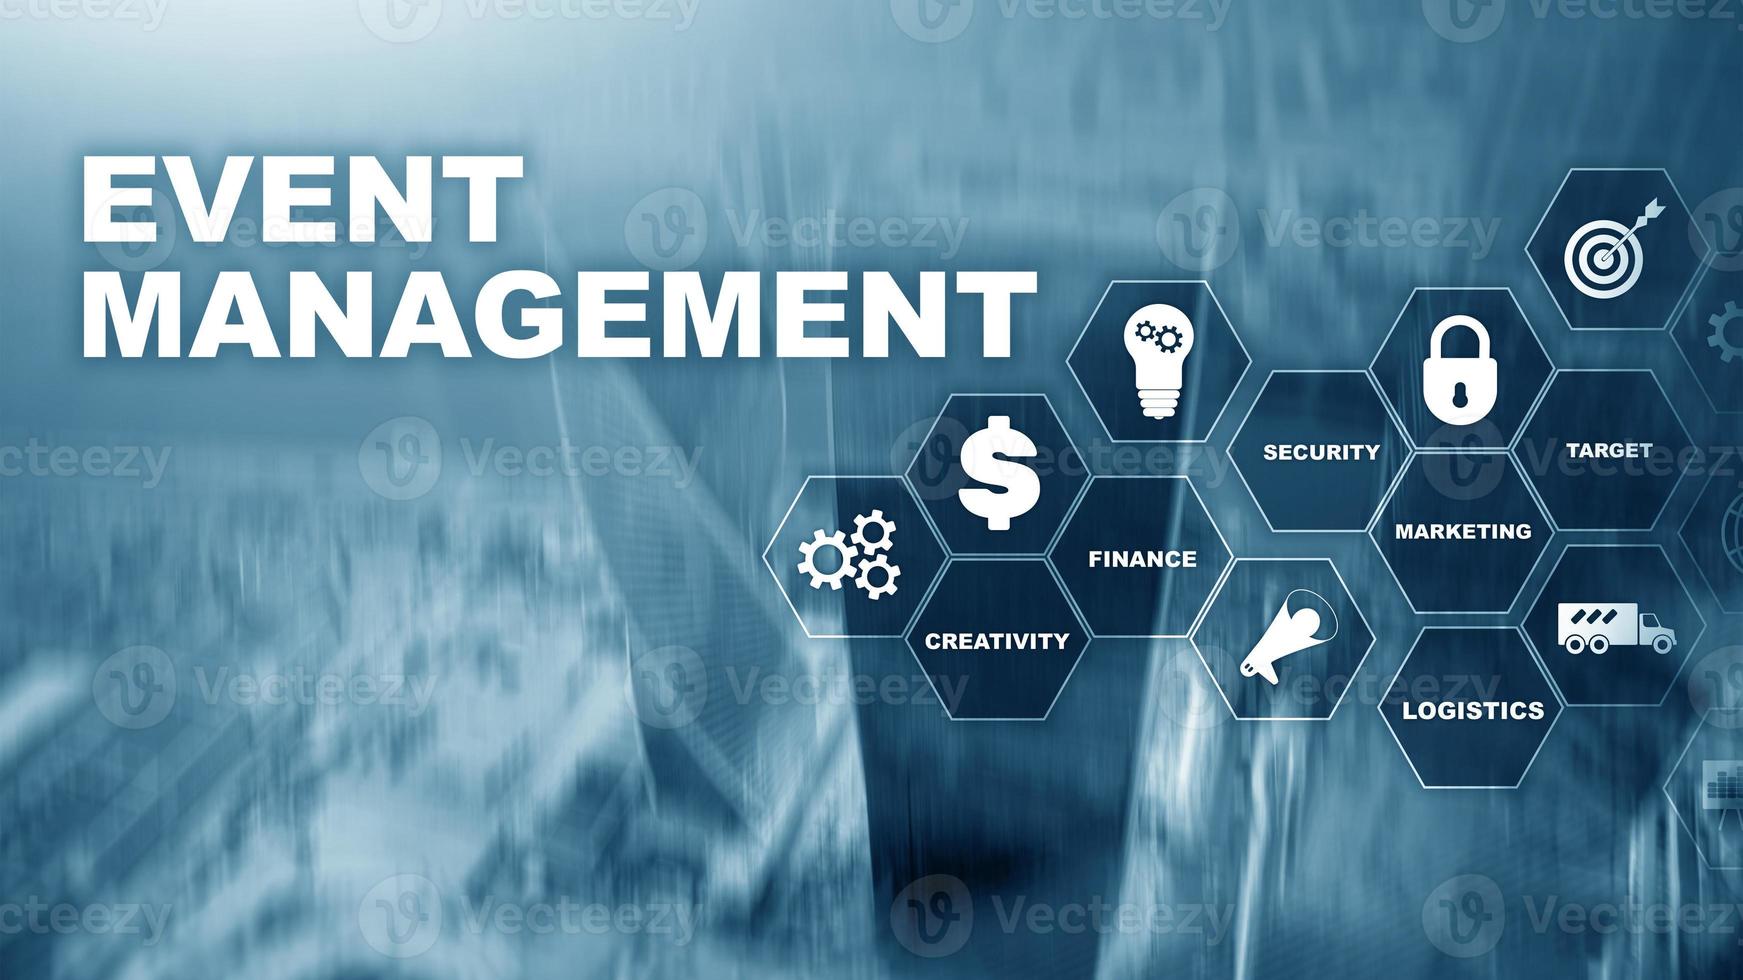 Event management Concept. Event management flowchart. Event management related items. Mixed media business photo